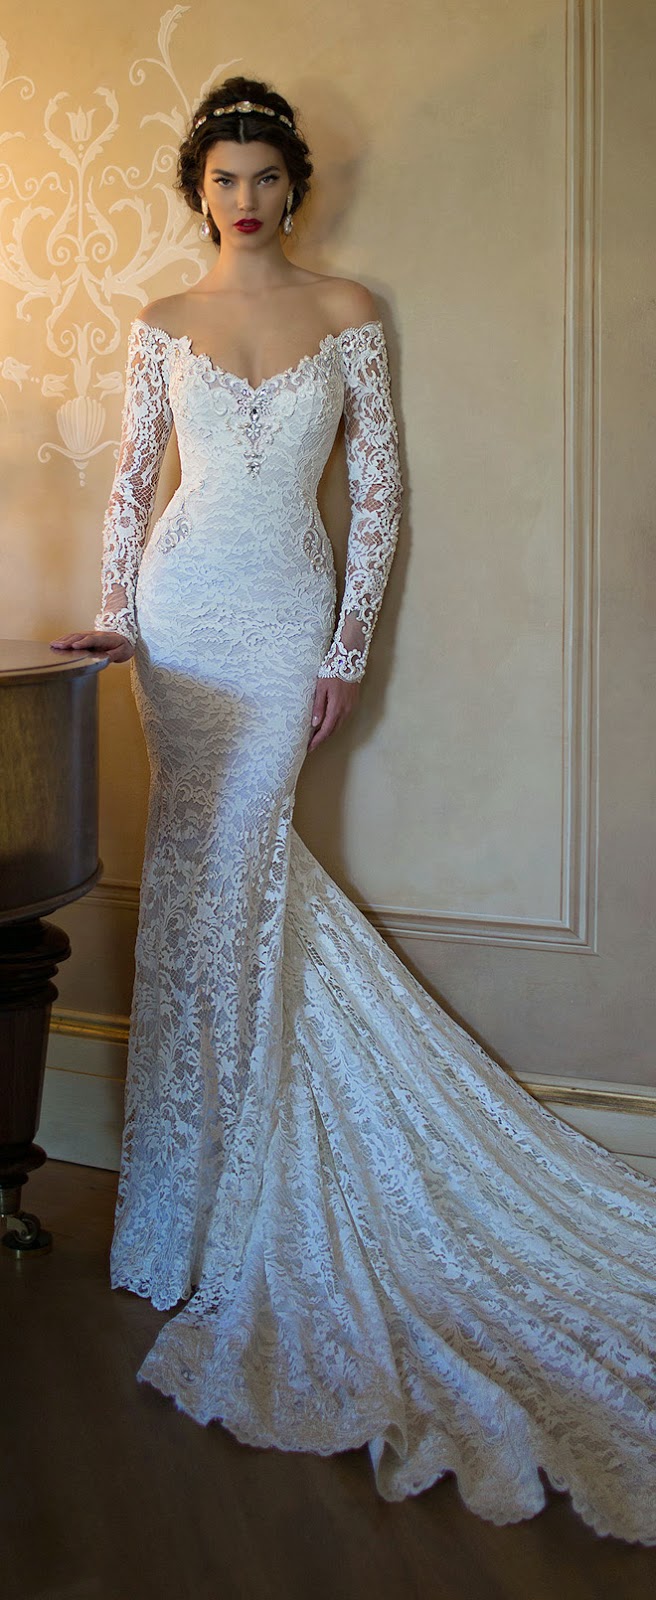 Best Wedding Dresses of 2014 - Berta Bridal